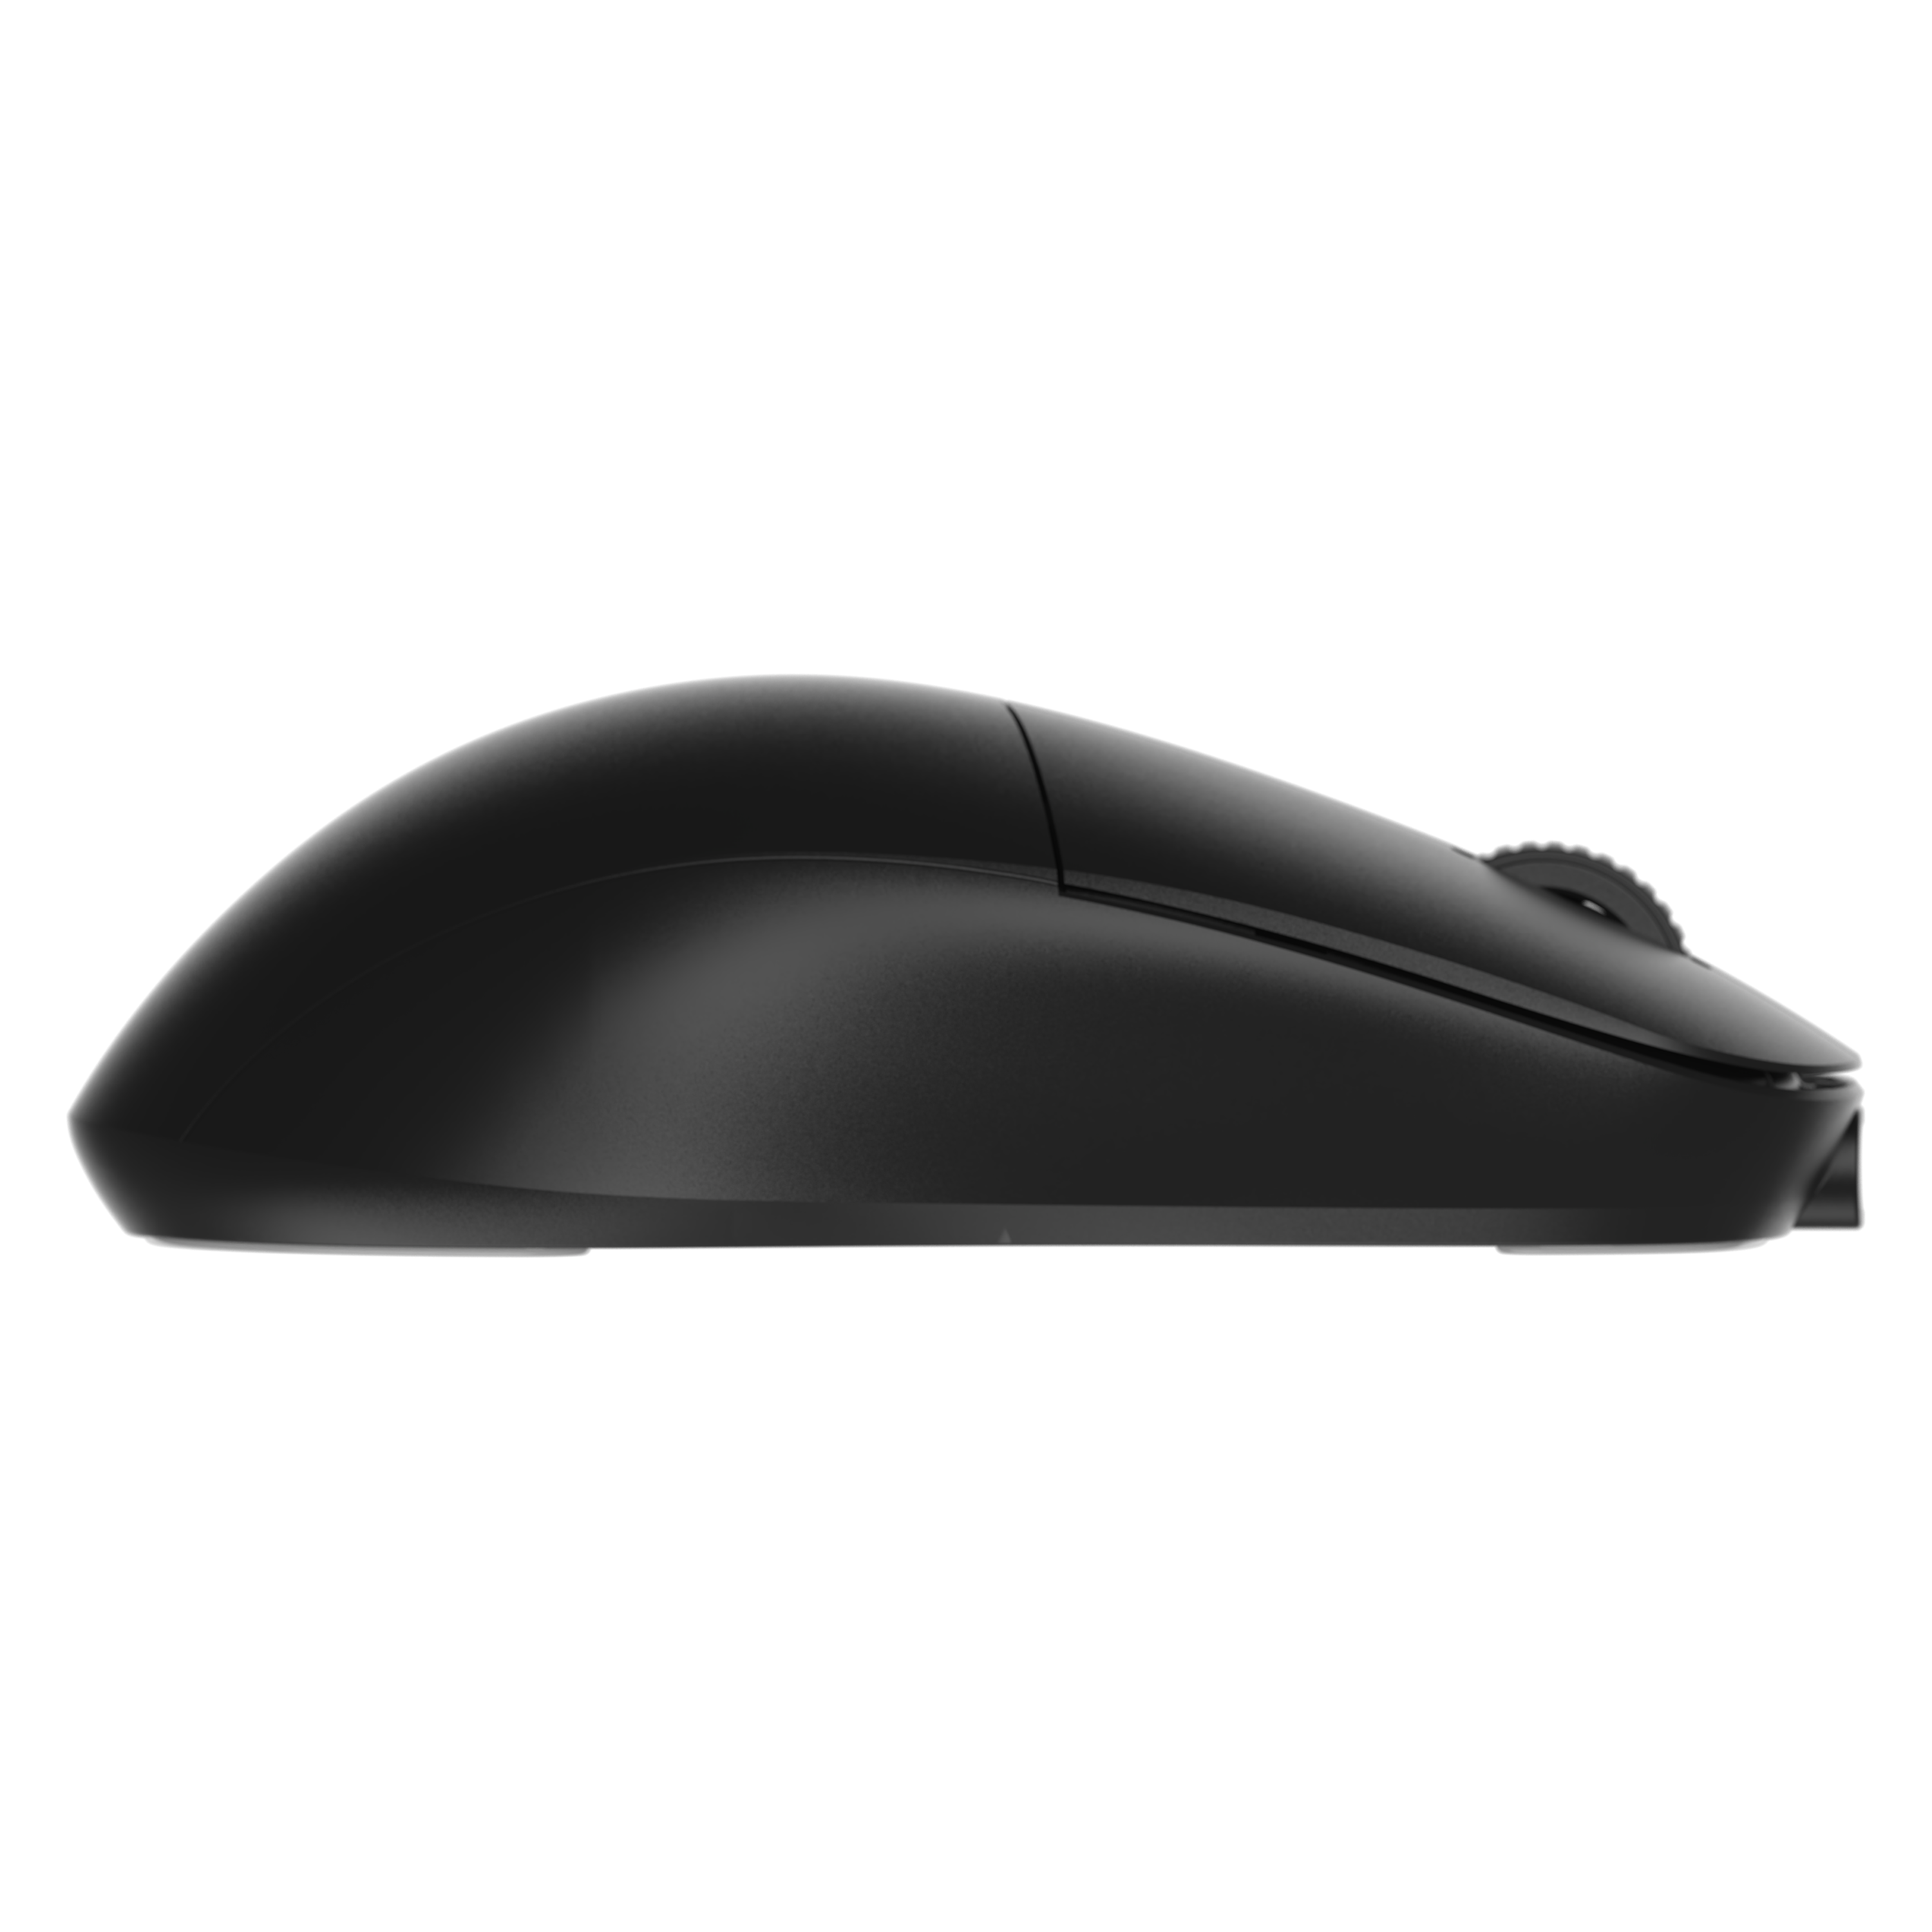 endgame-gear - XM2w Wireless Gaming Mouse - Black